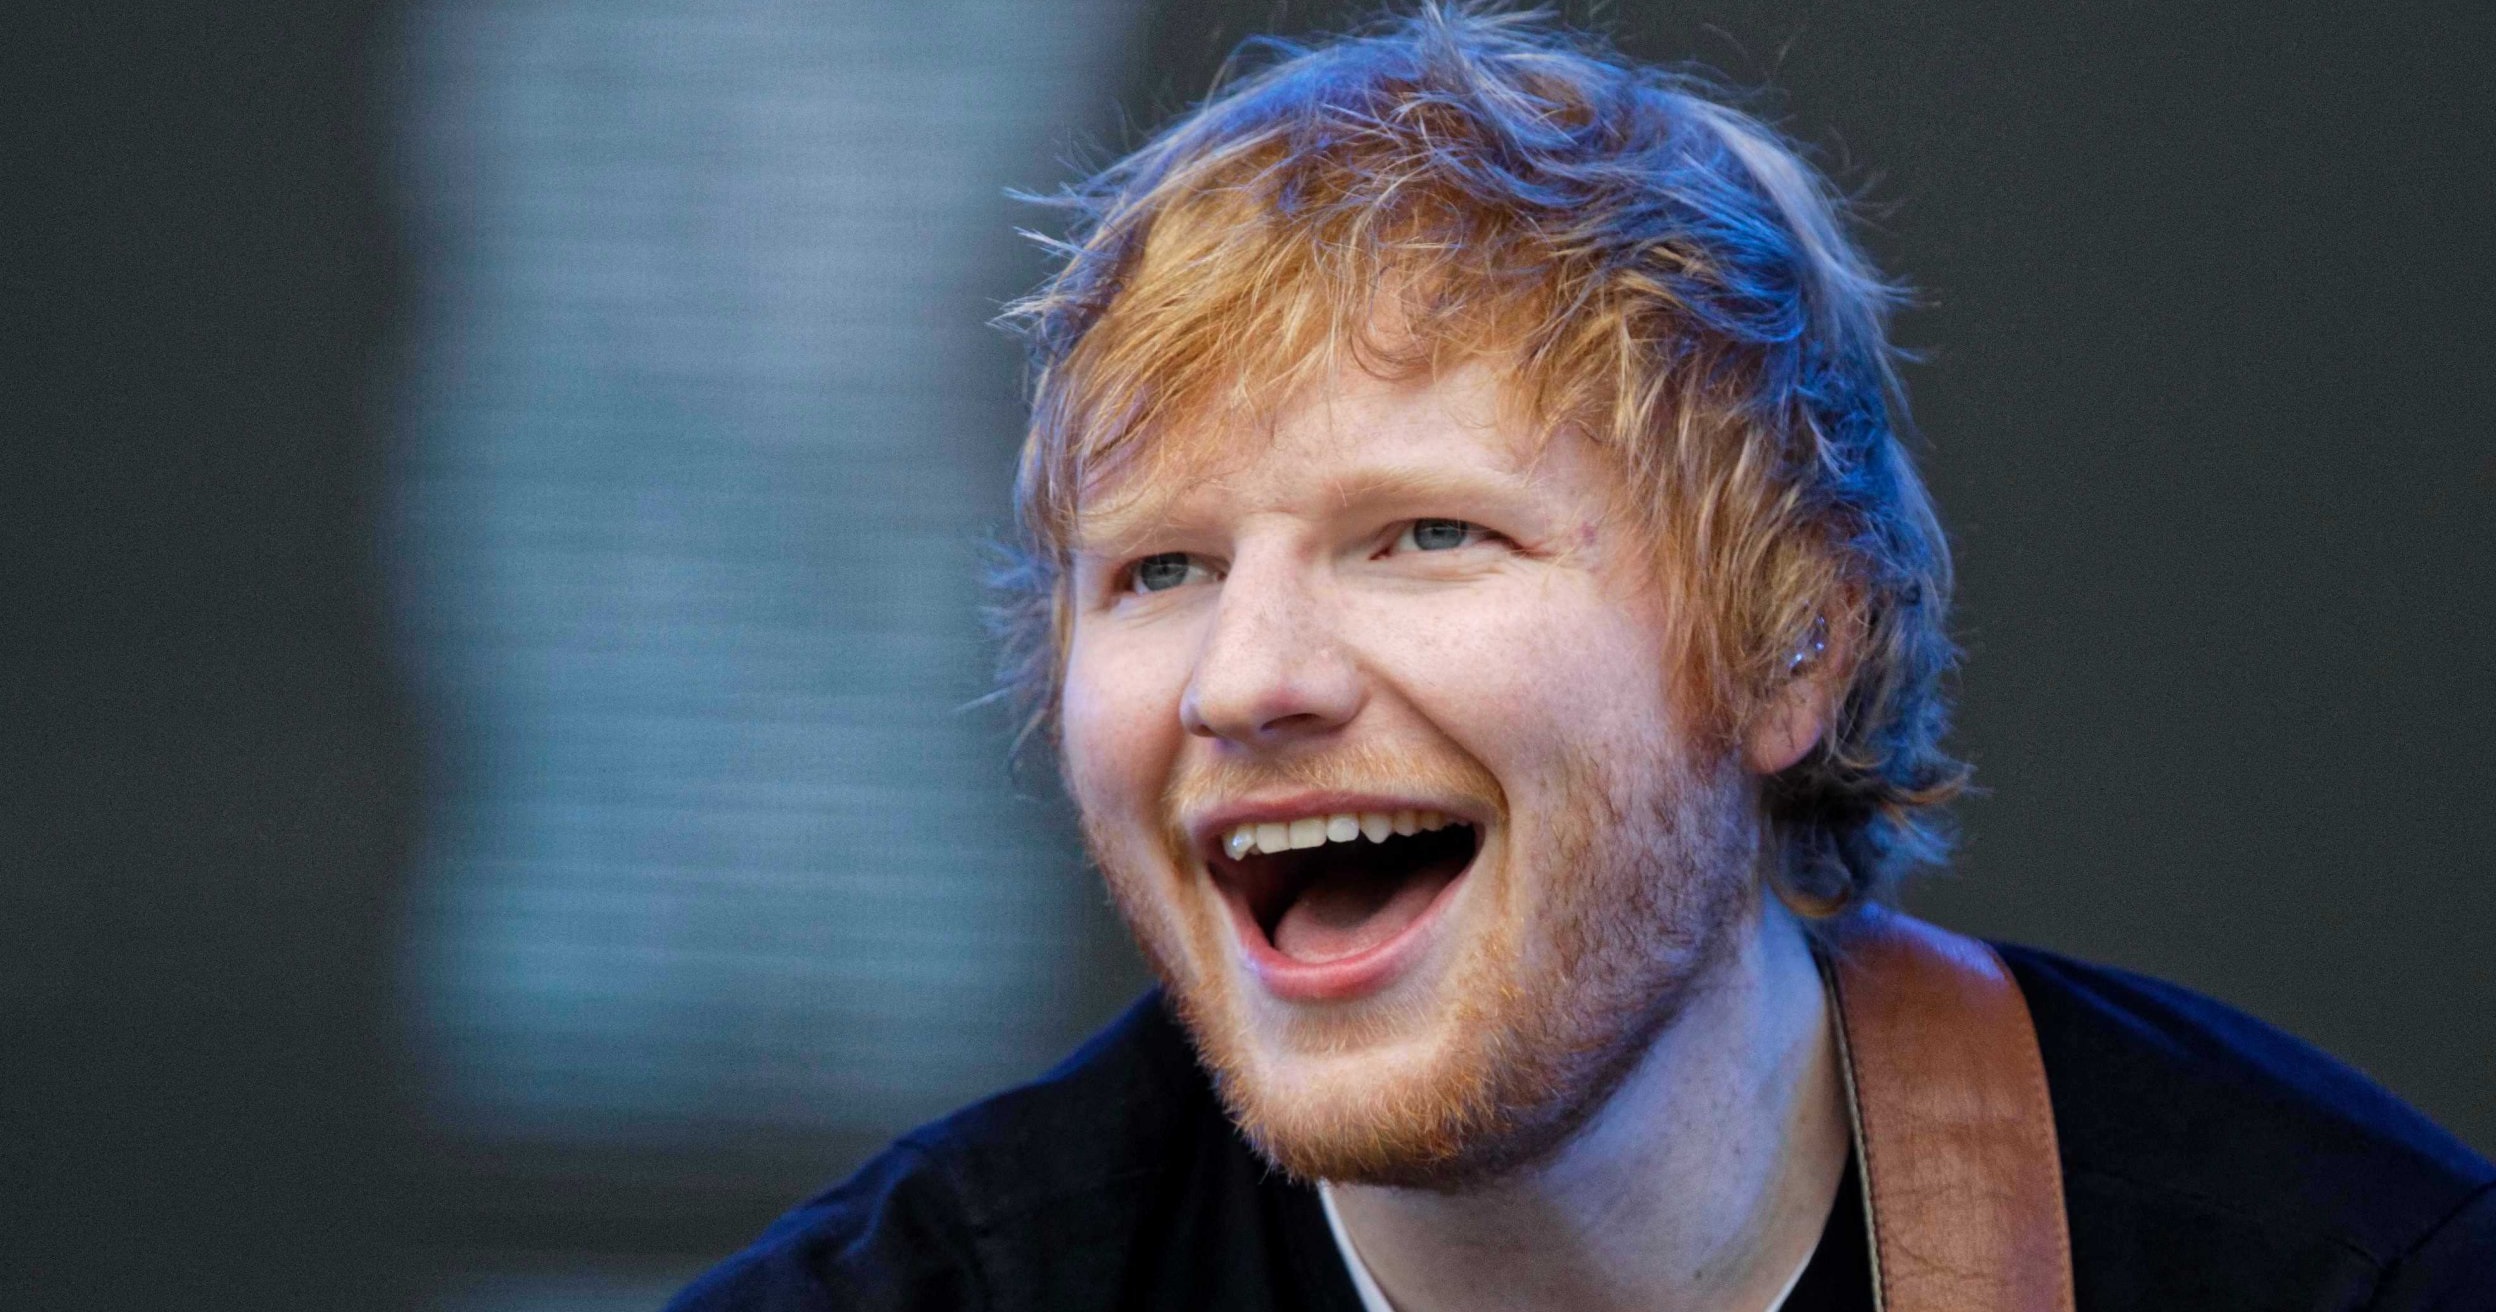 Ed Sheeran Announces He’s Taking a Break From Music